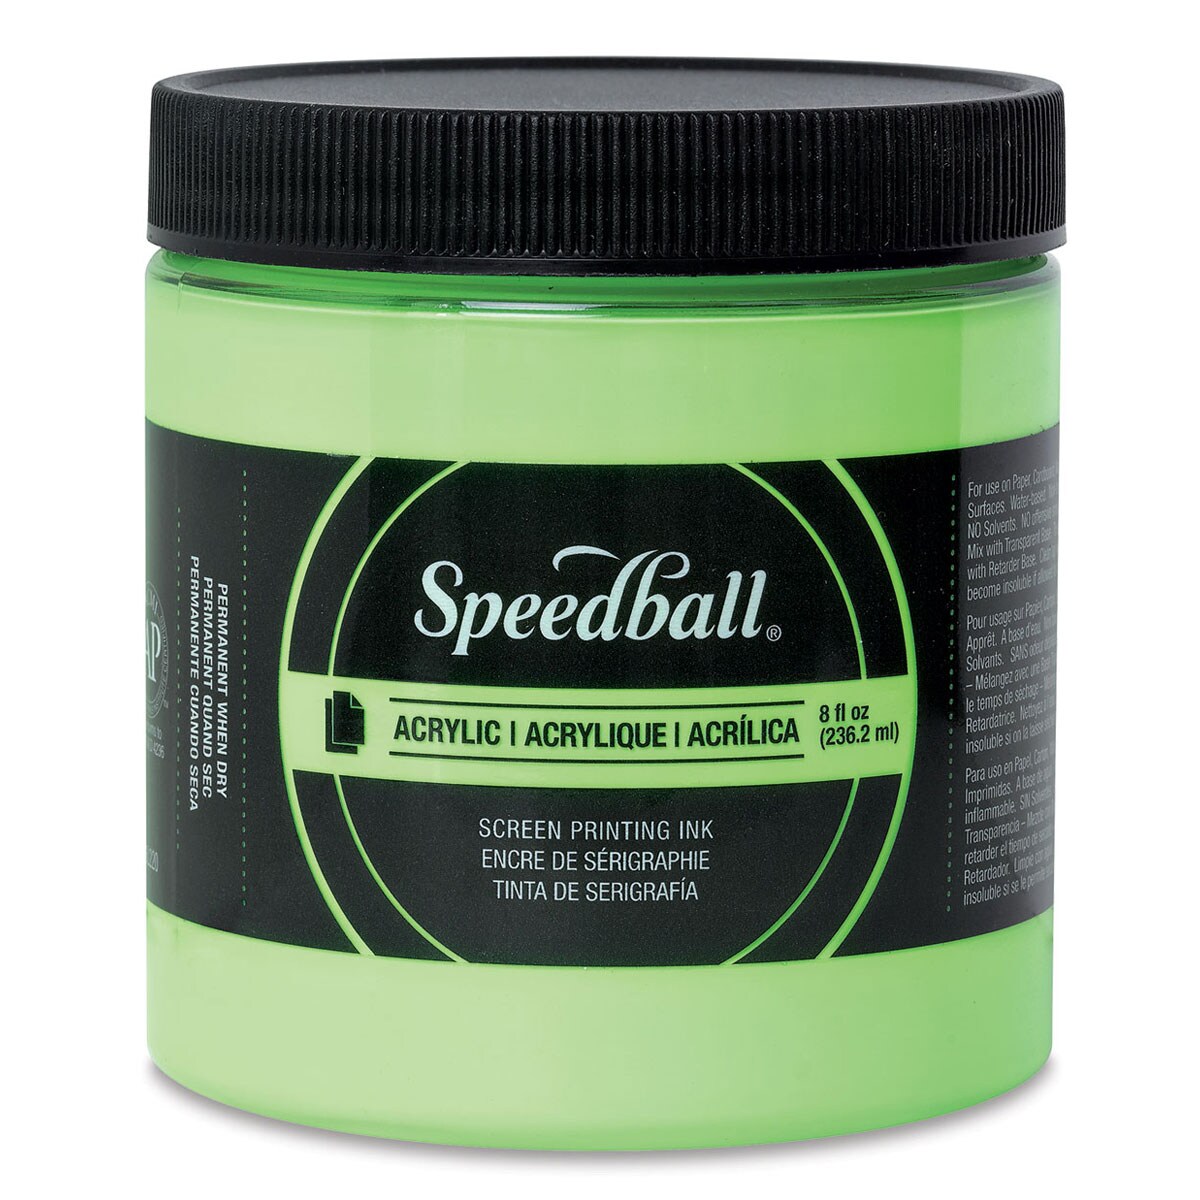 Speedball Permanent Acrylic Screen Printing Ink - Fluorescent Lime Green, 8 oz